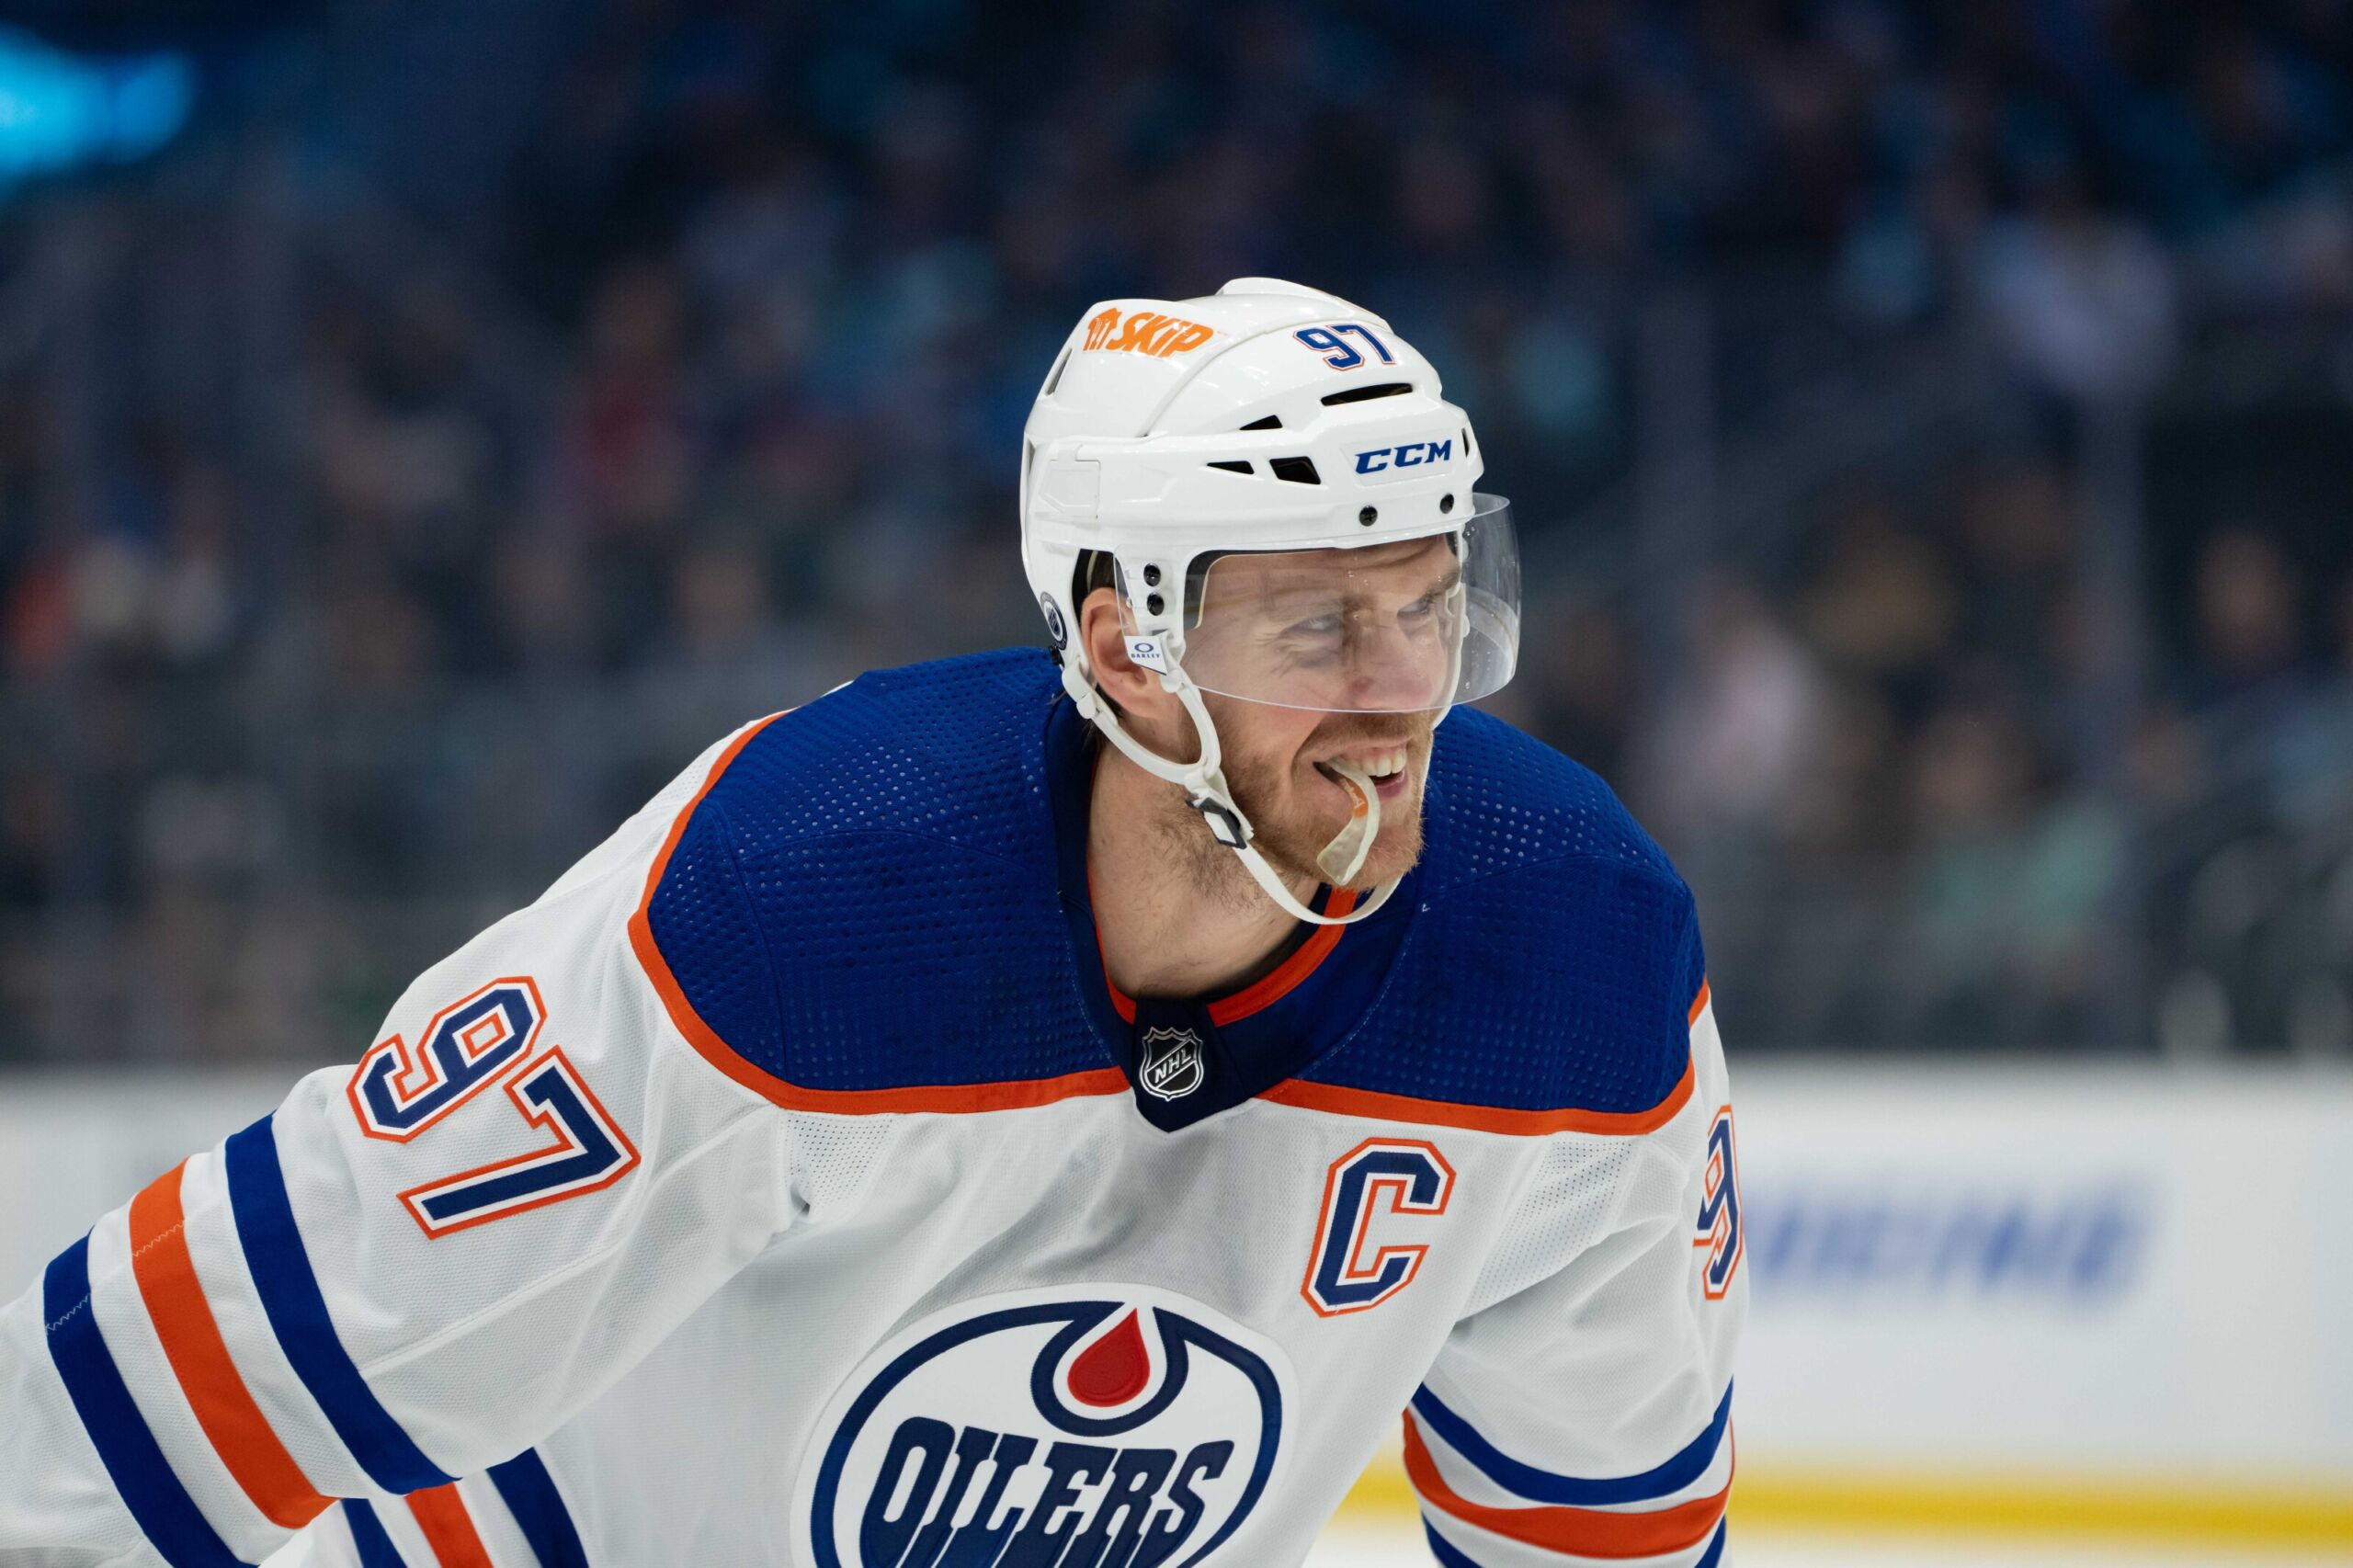 As Canadian as it gets': Connor McDavid's true feelings on Oilers